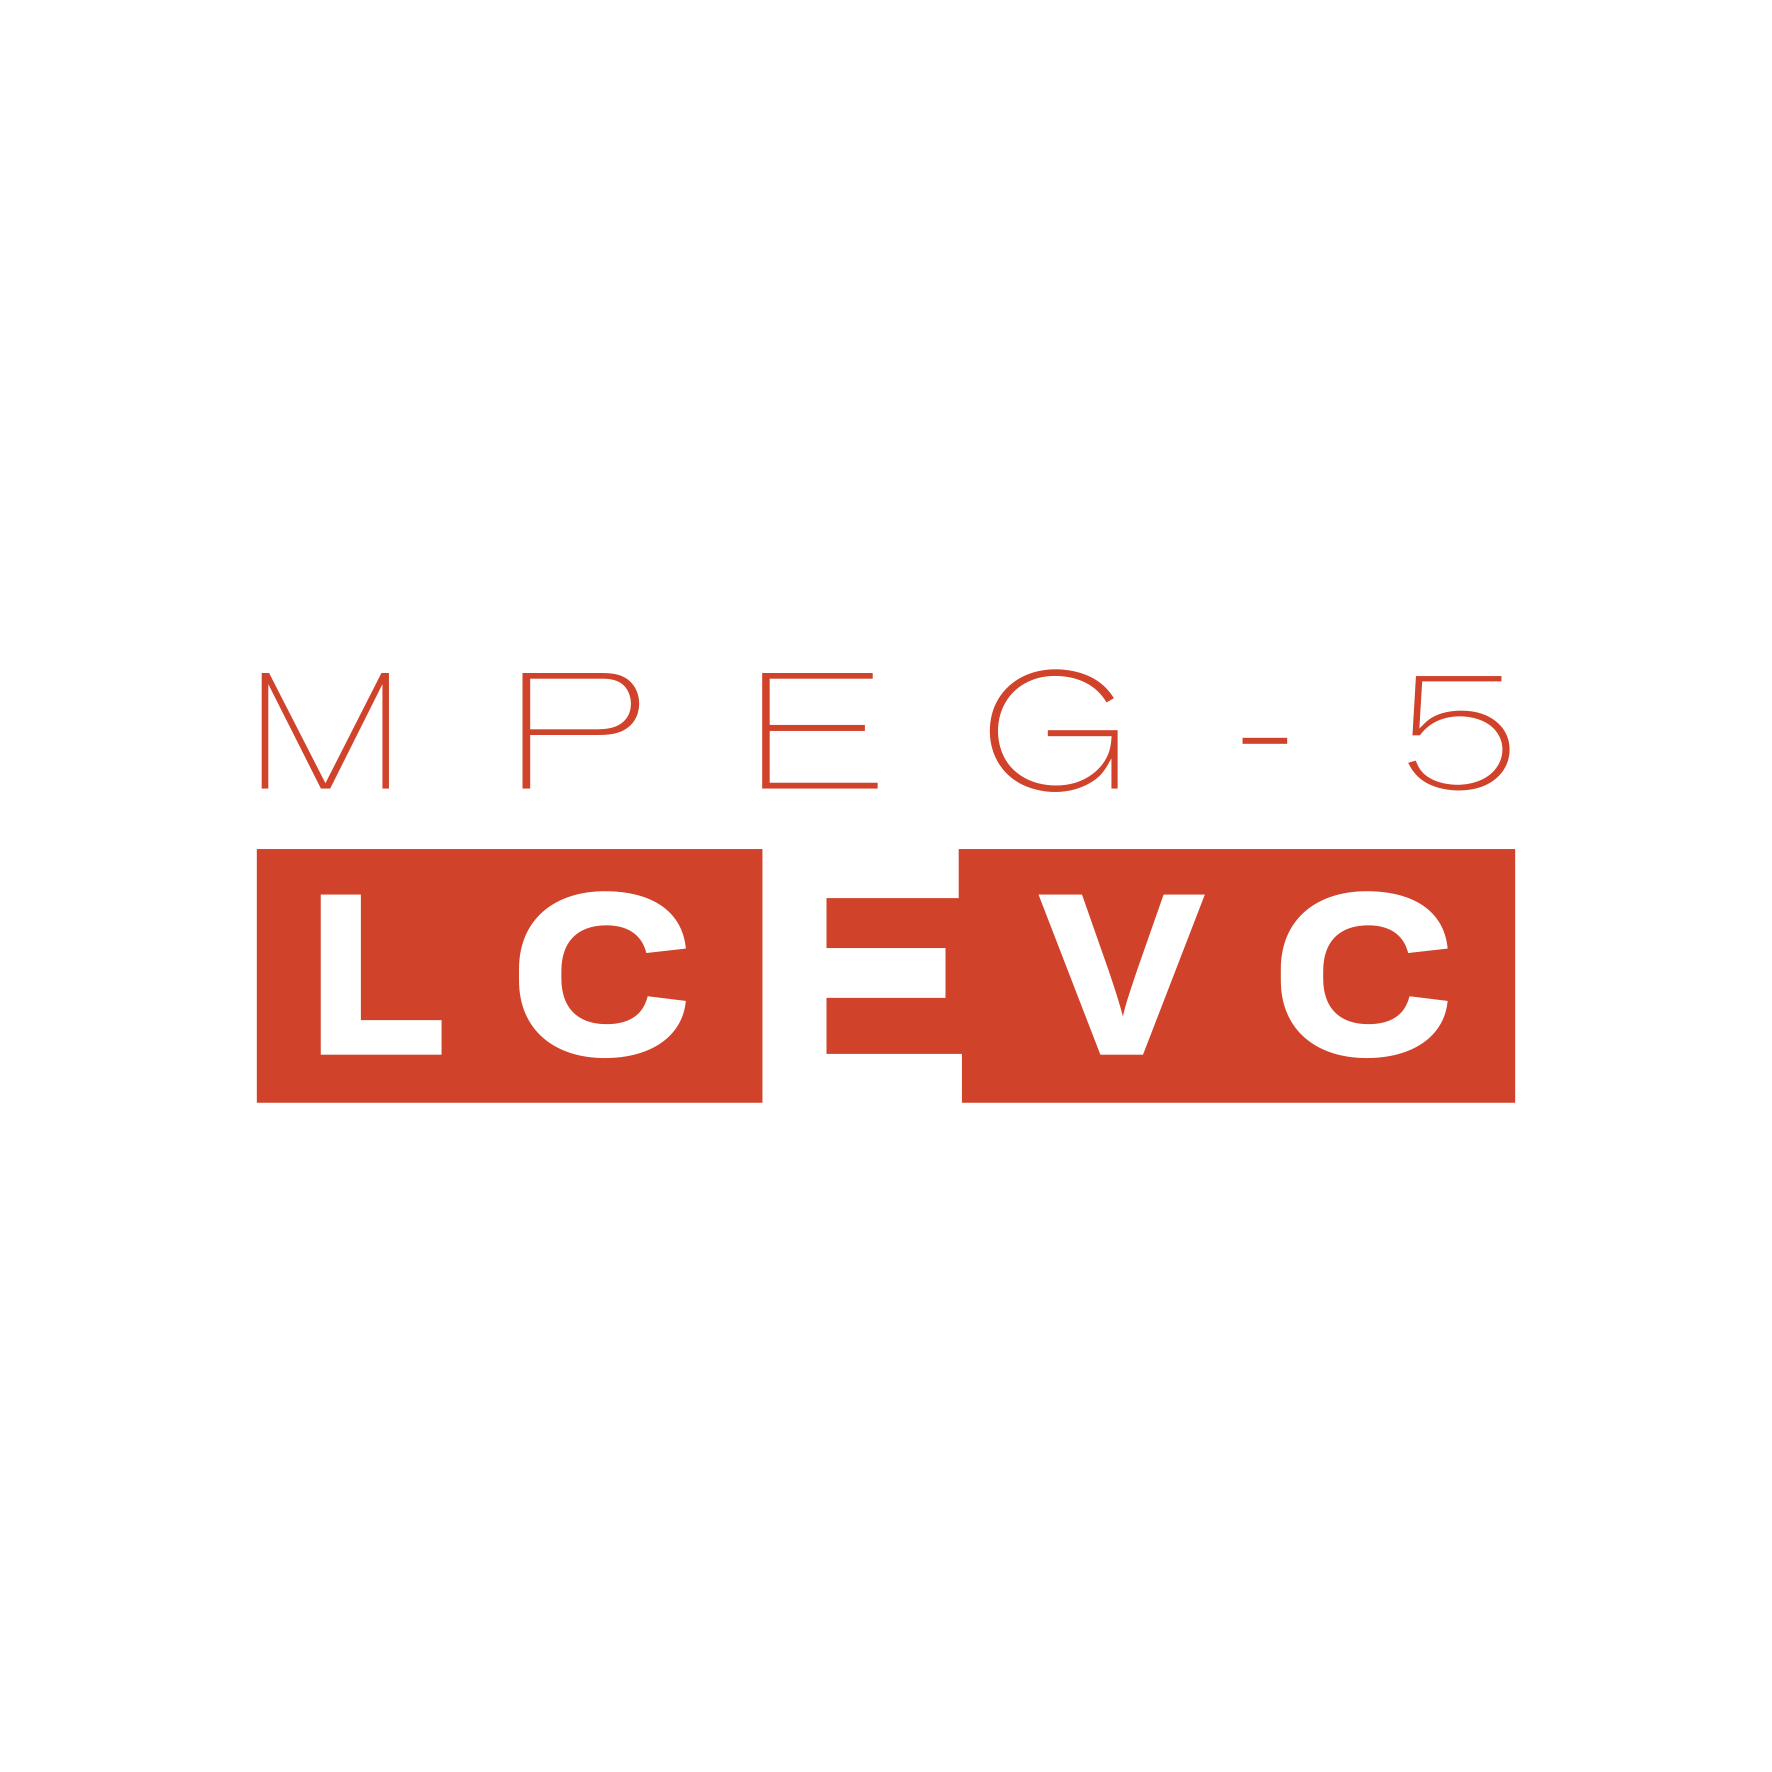 Primary MPEG 5 LCEVC Logo RGB 1